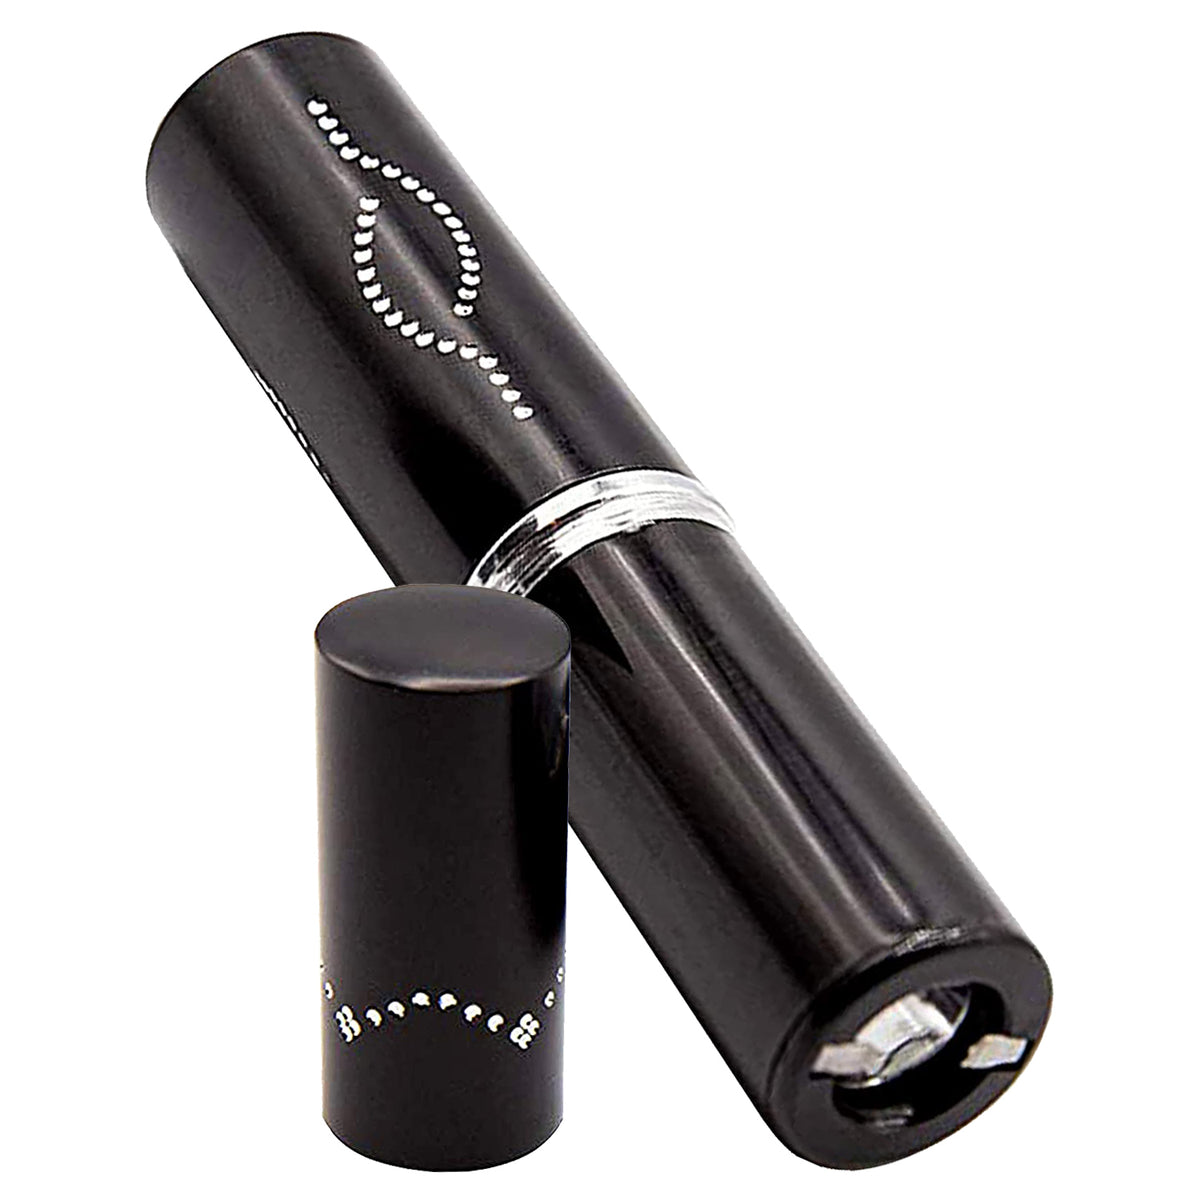  BLINGSTING Mini Lipstick Stun Gun for Women Self Defense with  Flashlight & USB Rechargeable Battery, Black : Sports & Outdoors